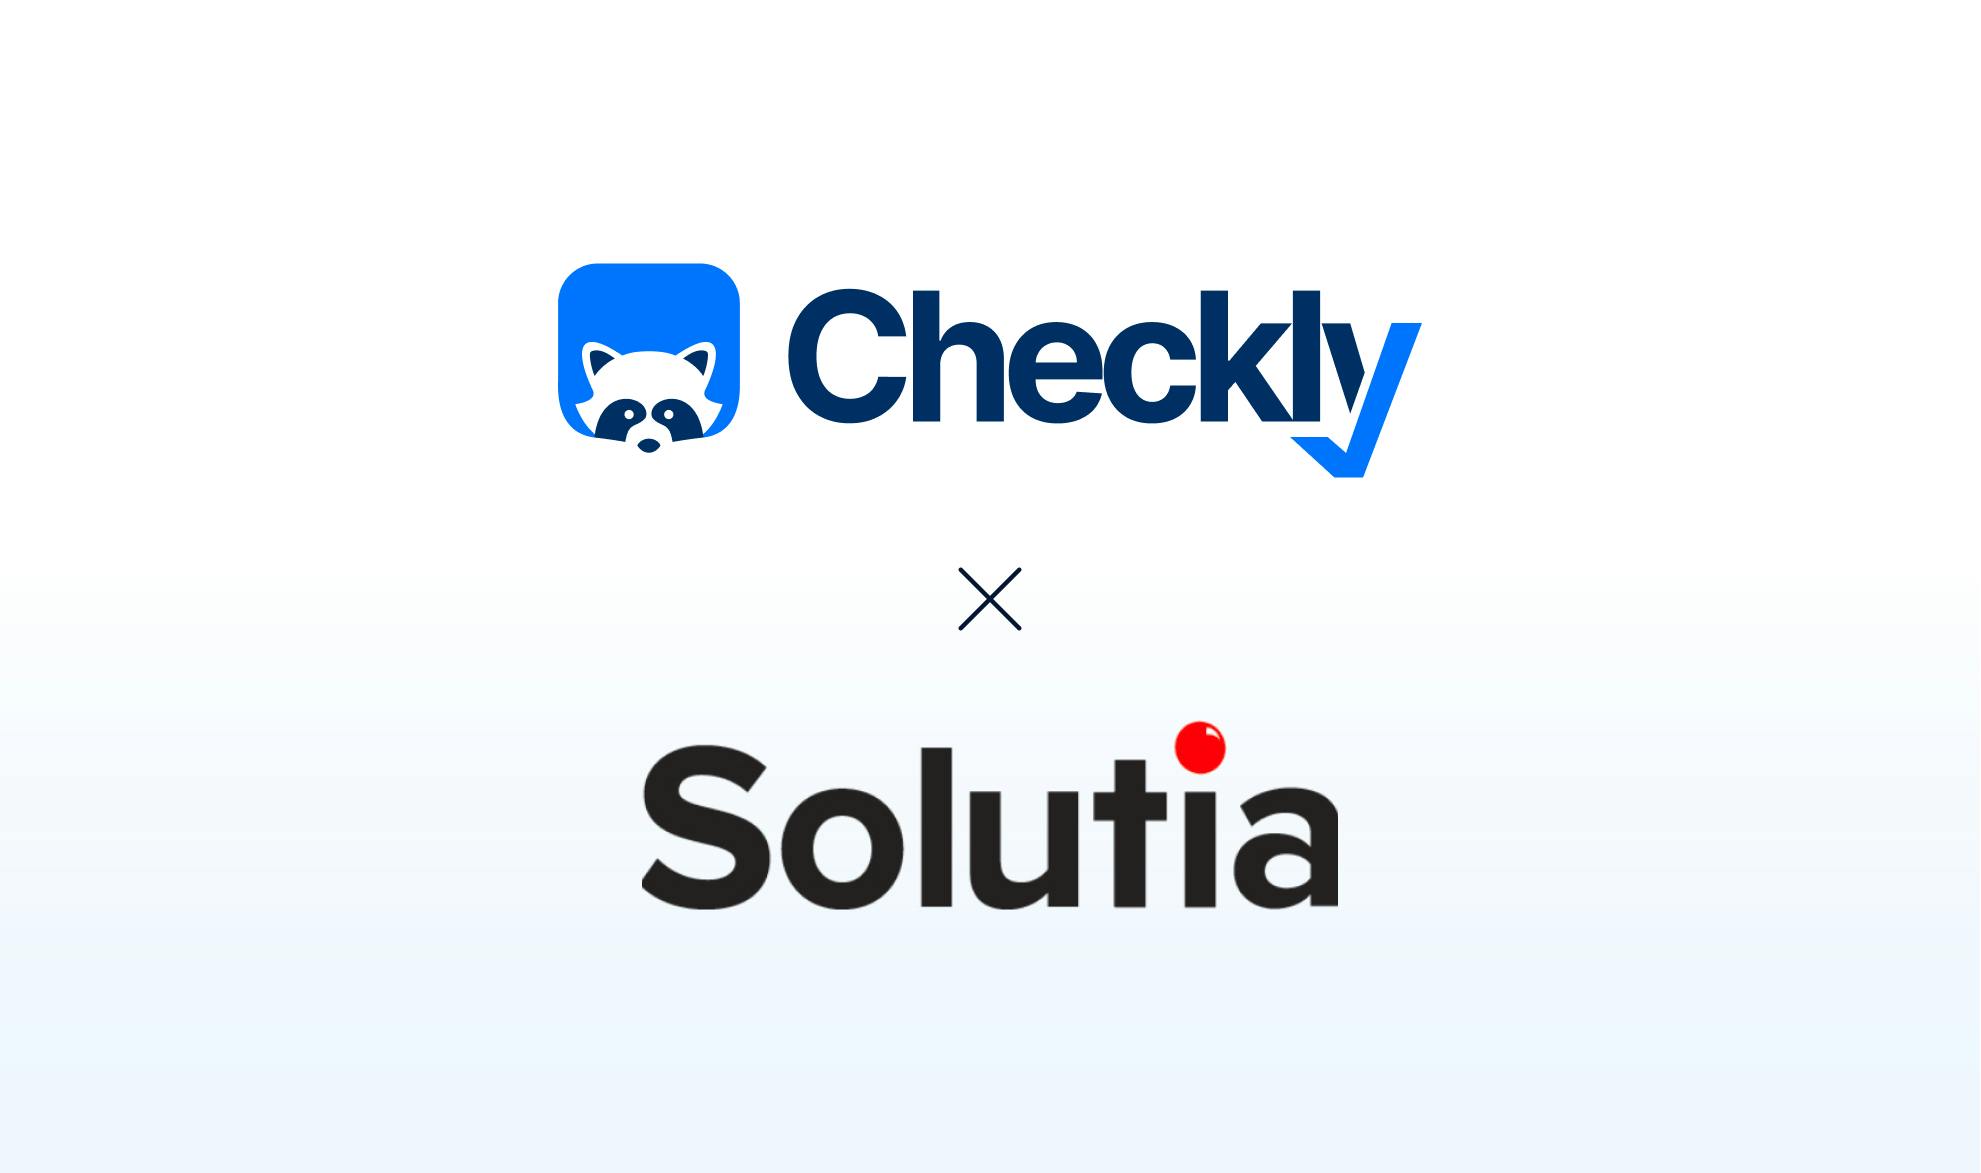 Checkly and Solutia logo